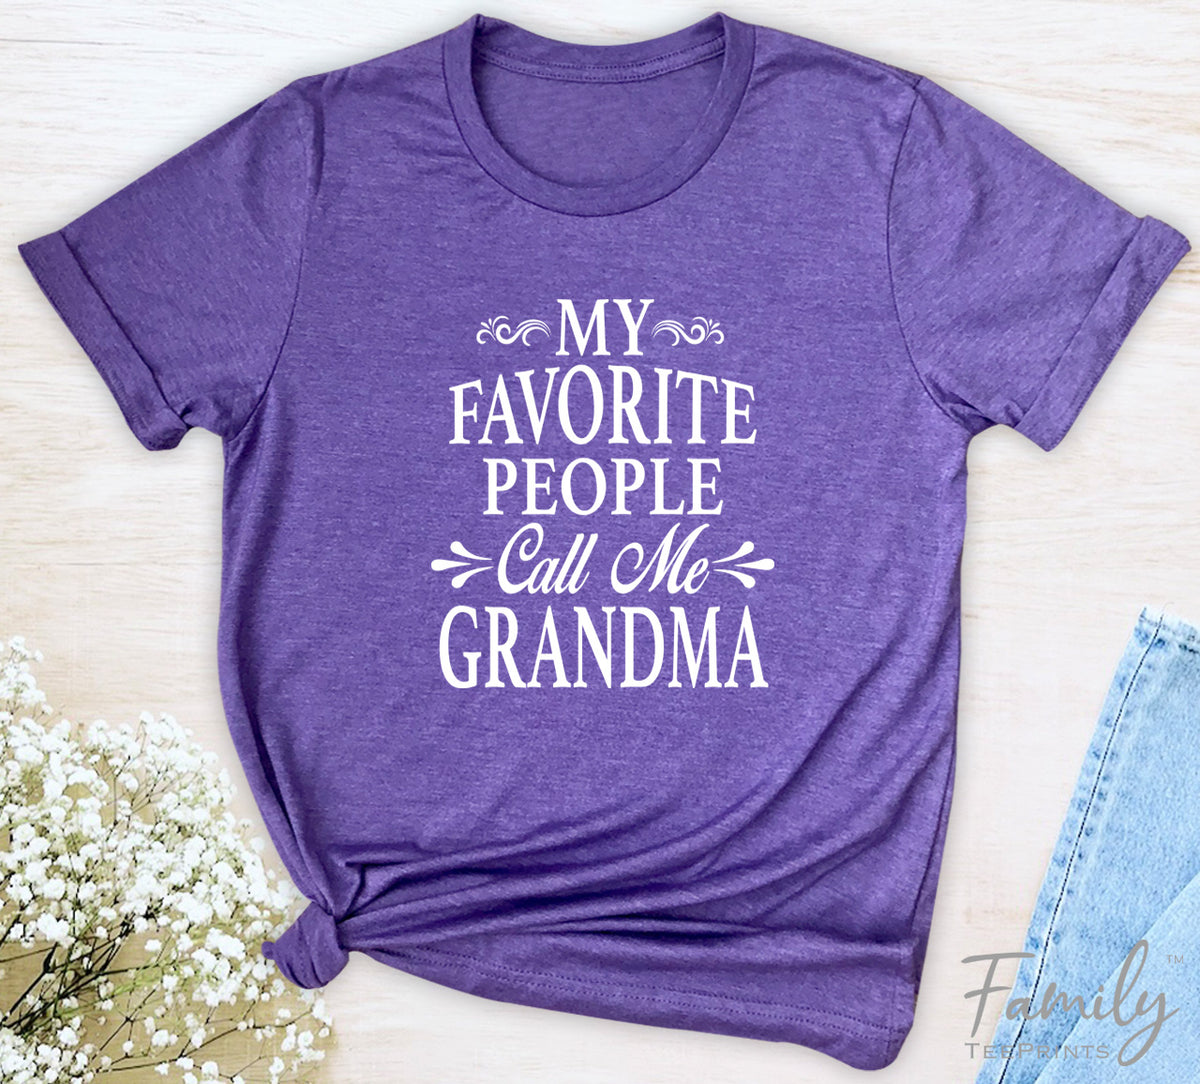 My Favorite People Call Me Grandma - Unisex T-shirt - Grandma Shirt - Gift For Grandma